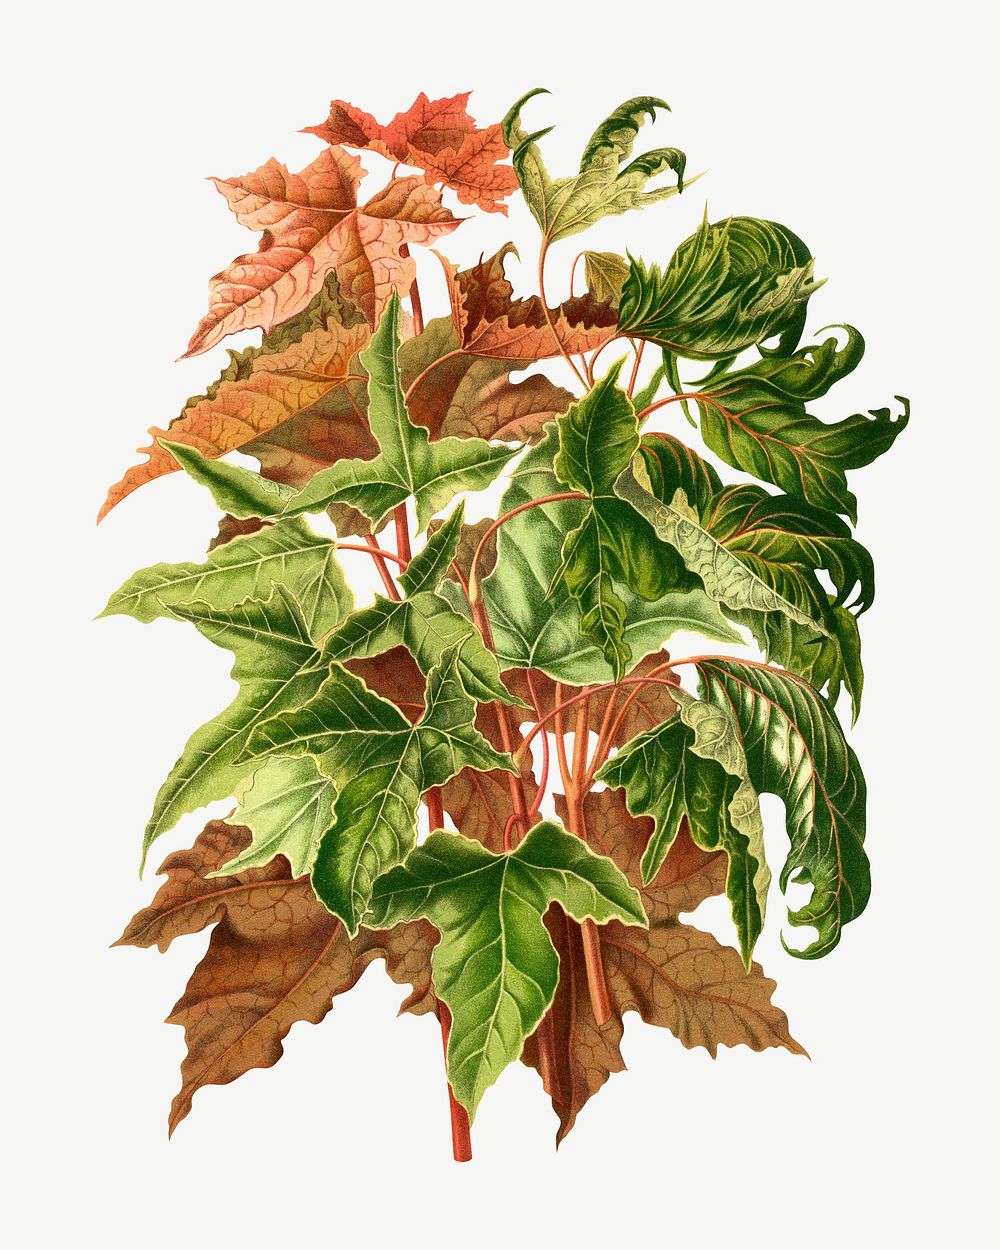 Vintage maple leaves illustration, collage element psd. Remixed from our own original 1879 edition of Nederlandsche Flora en…